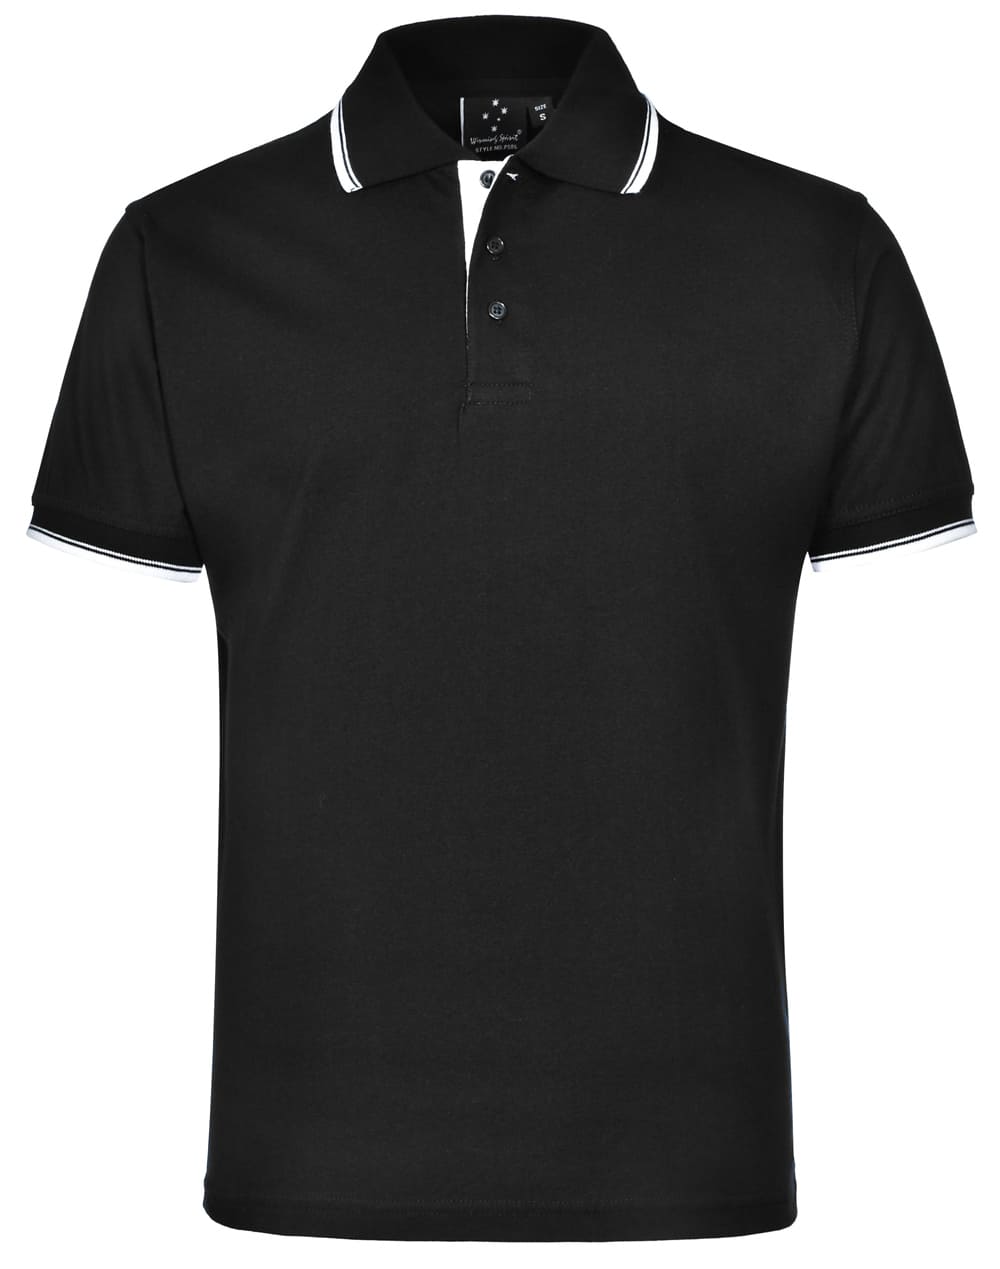 Custom (Black-White) Macquarie Unisex Contrast Cotton Kit Polos Online in Perth